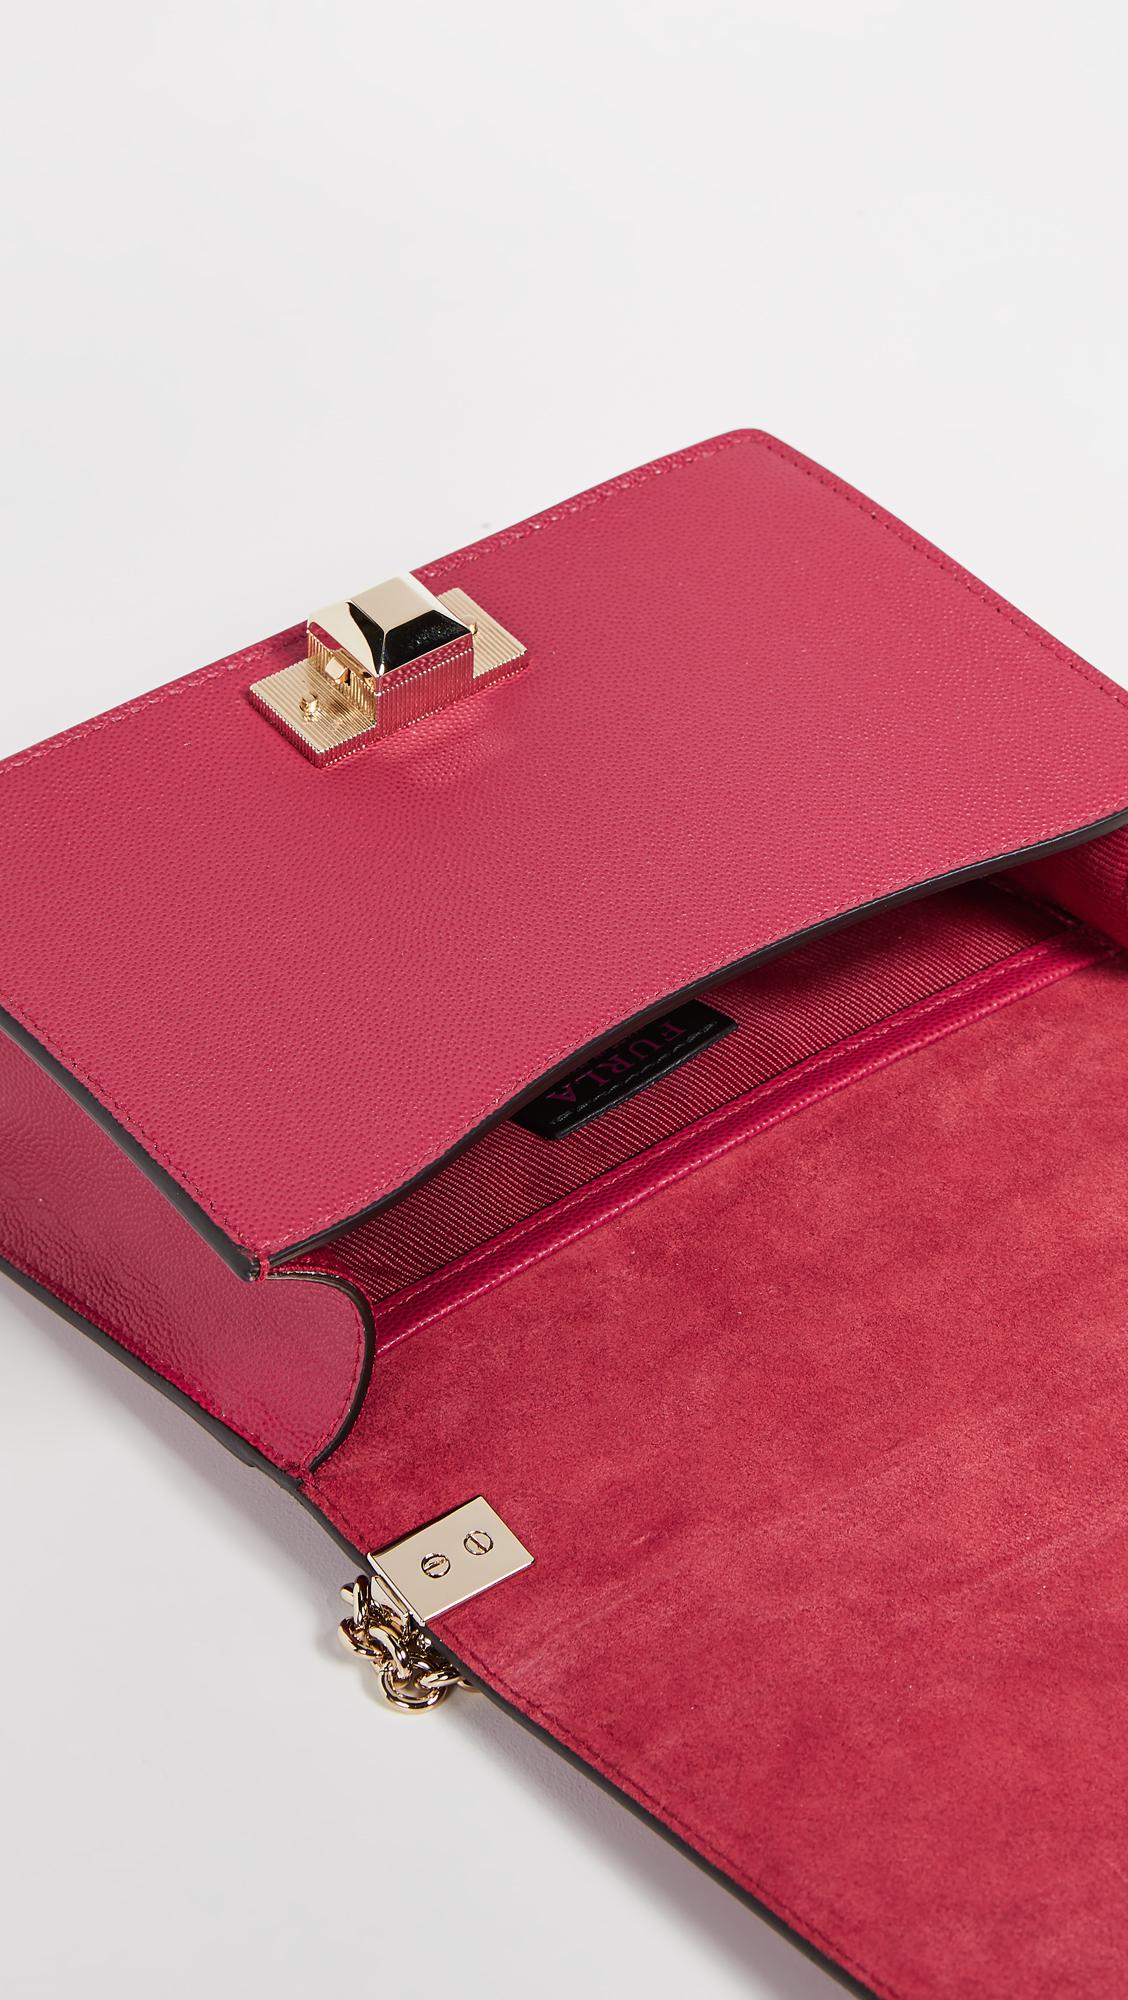 Furla Leather Mimi Mini Crossbody Bag in Ruby (Red) - Lyst